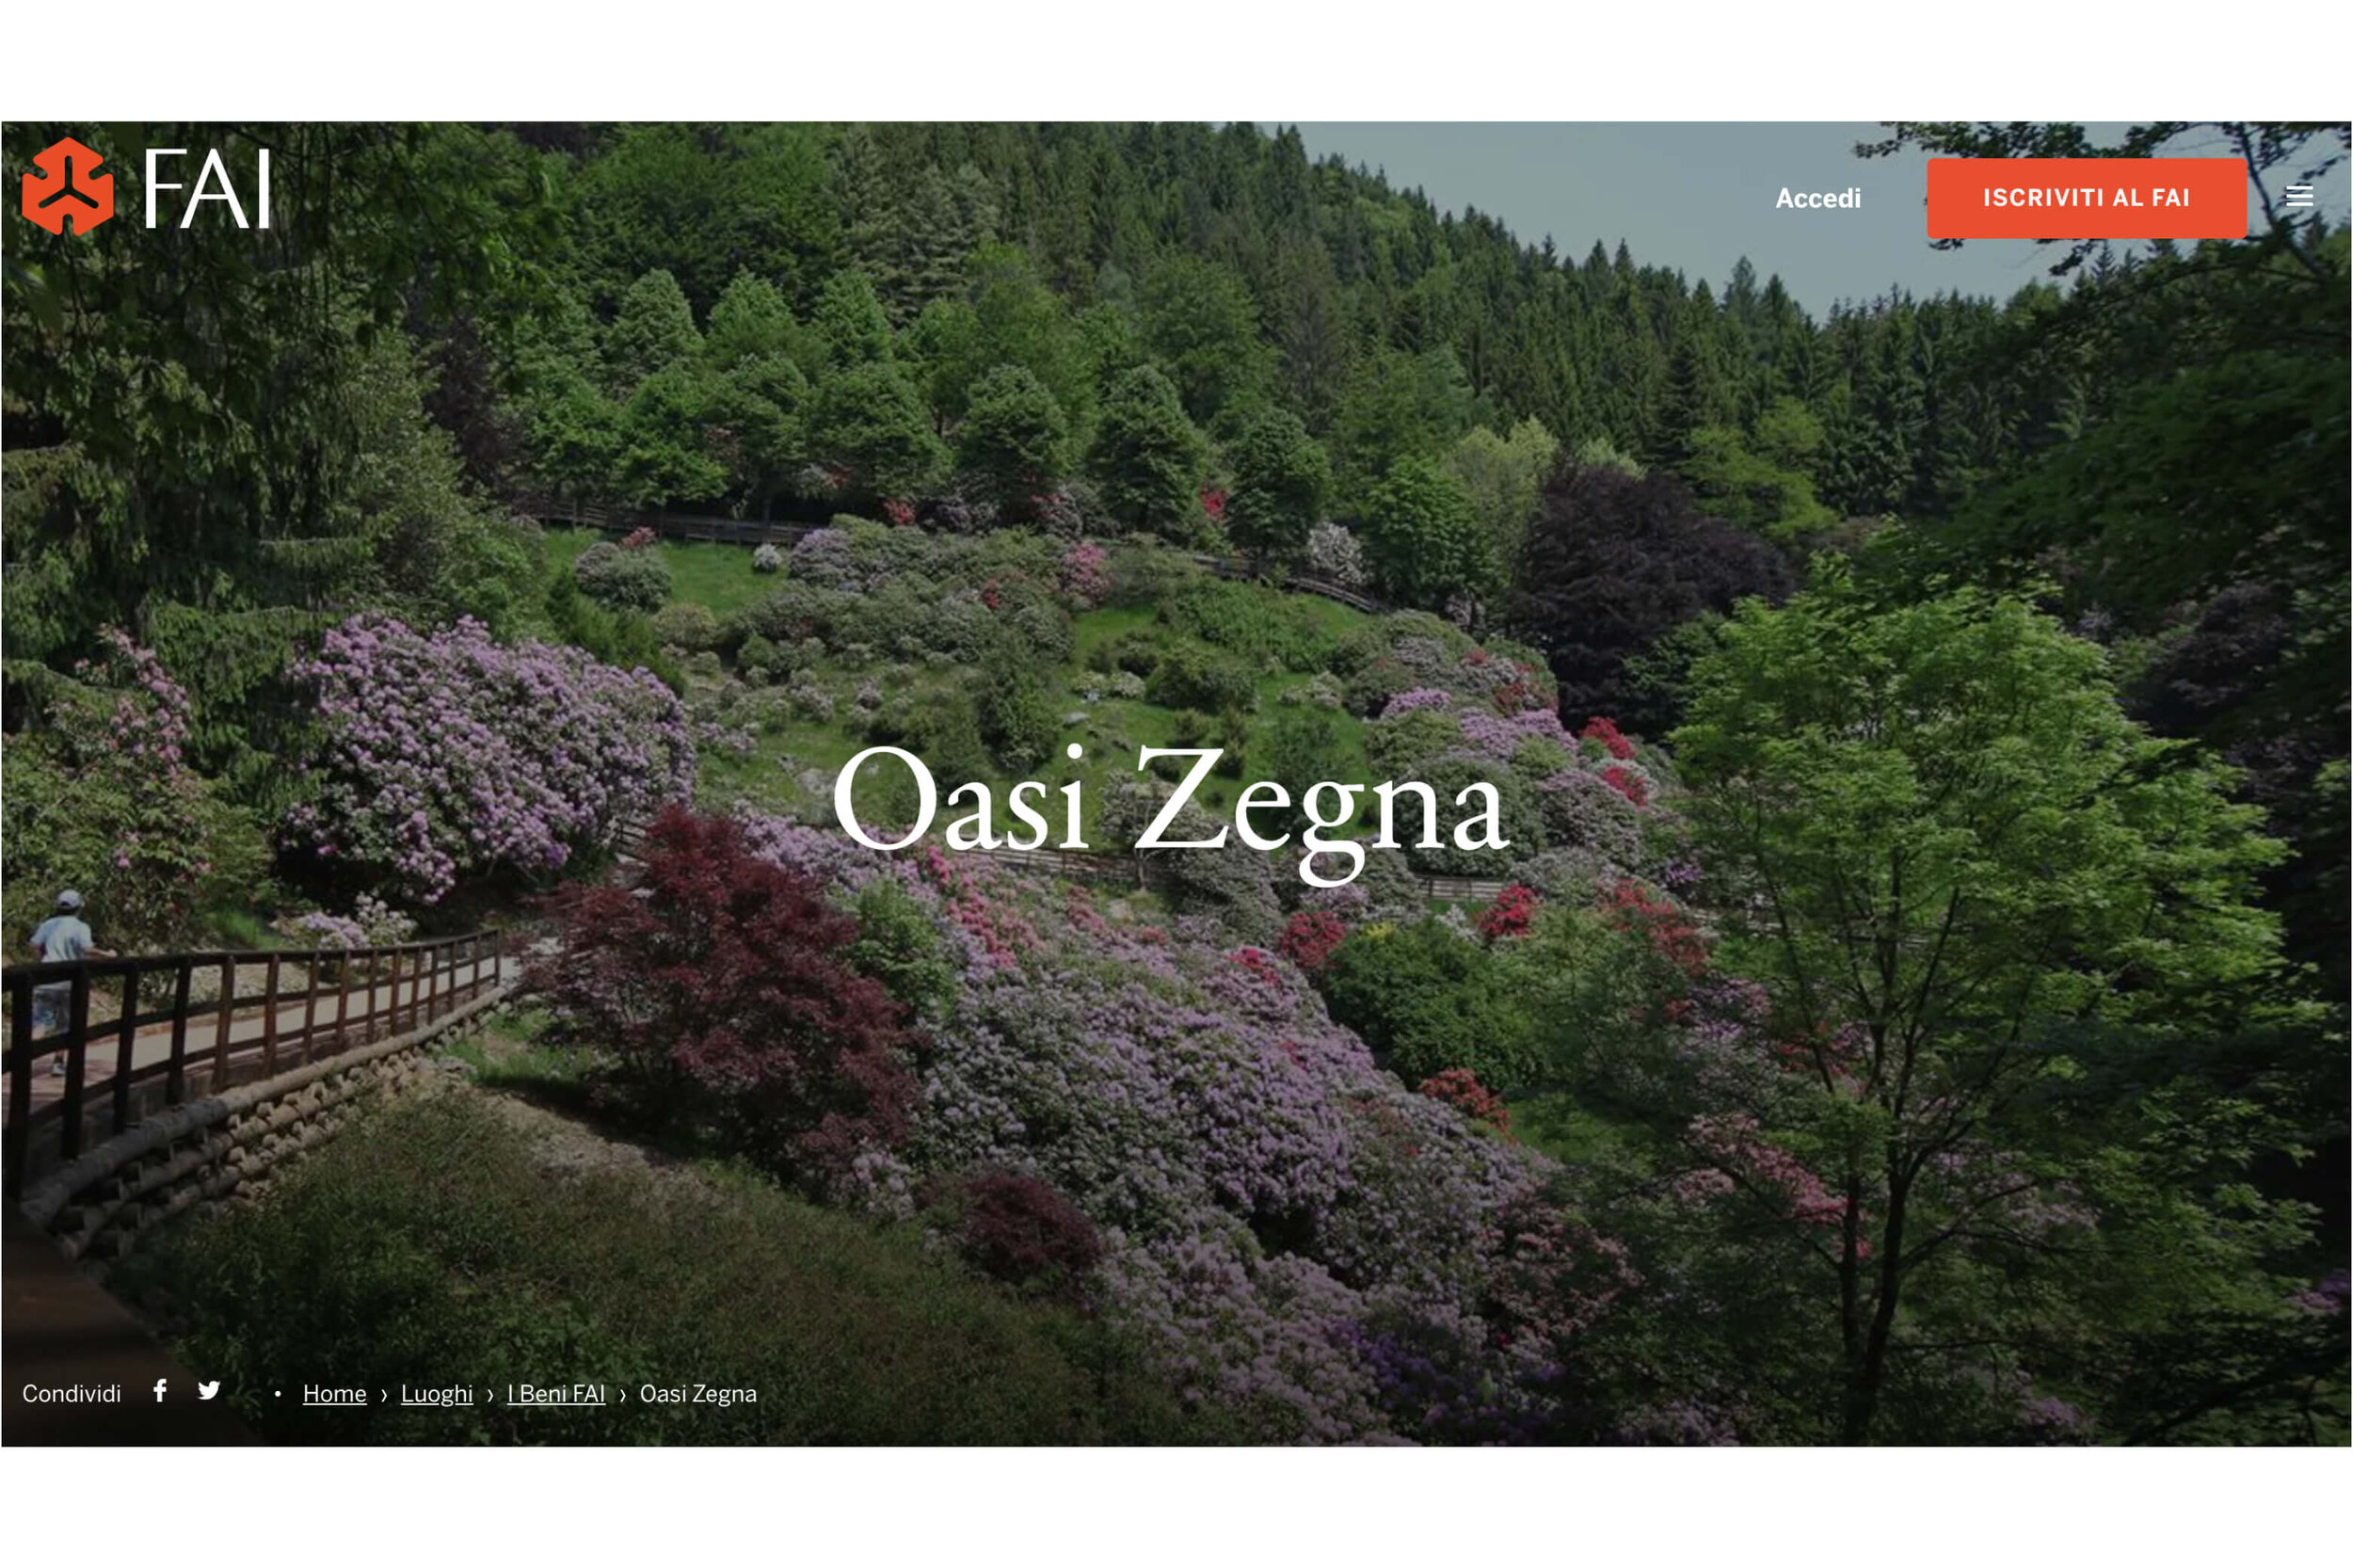 Oasi_Zegna_partnership3.jpg